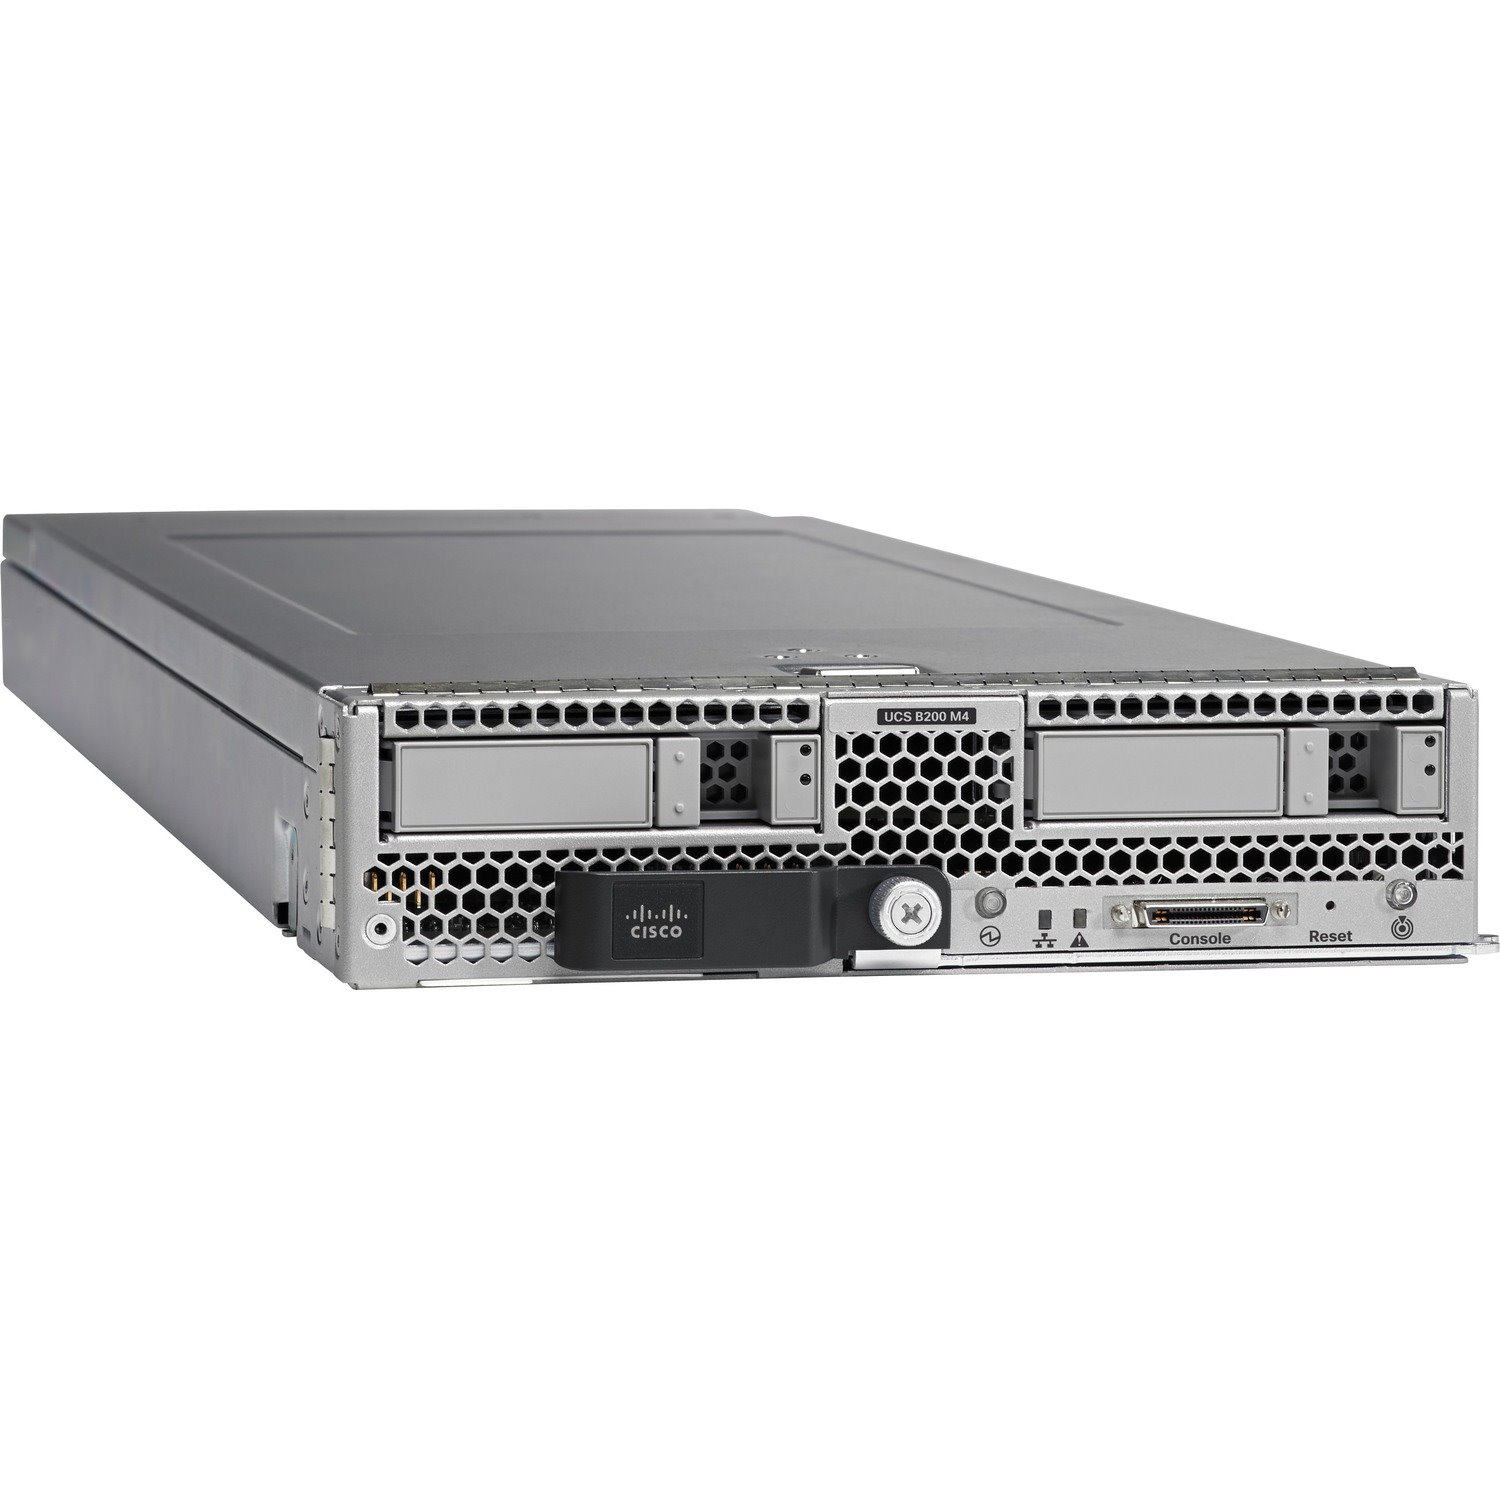 Cisco B200 M4 Blade Server - 2 x Intel Xeon E5-2660 v3 2.60 GHz - 128 GB RAM - 12Gb/s SAS Controller - Refurbished